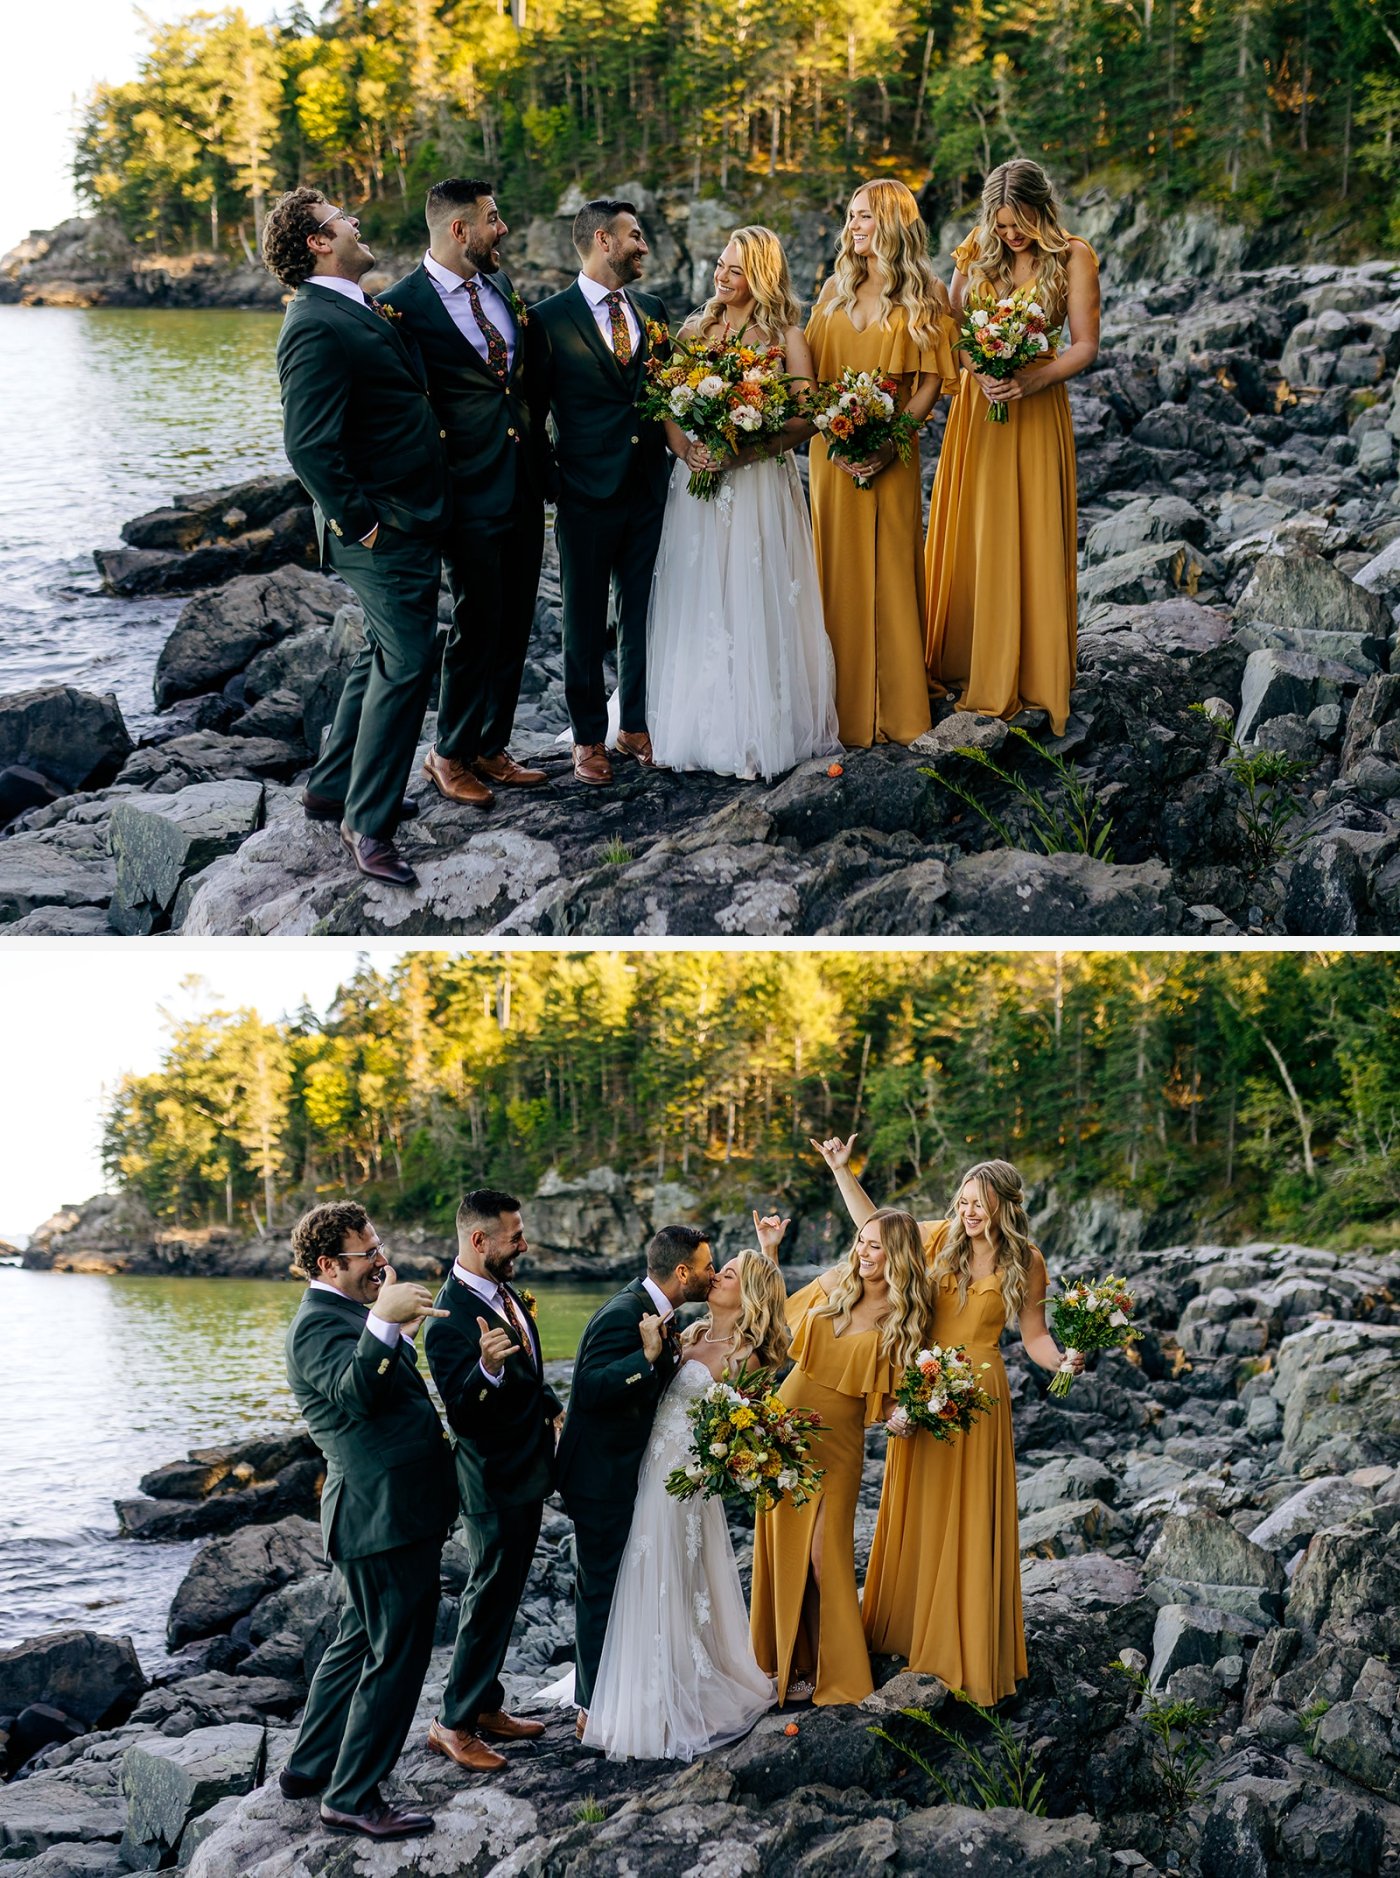 groomsmen in emerald suits and bridesmaids in dark orange dresses